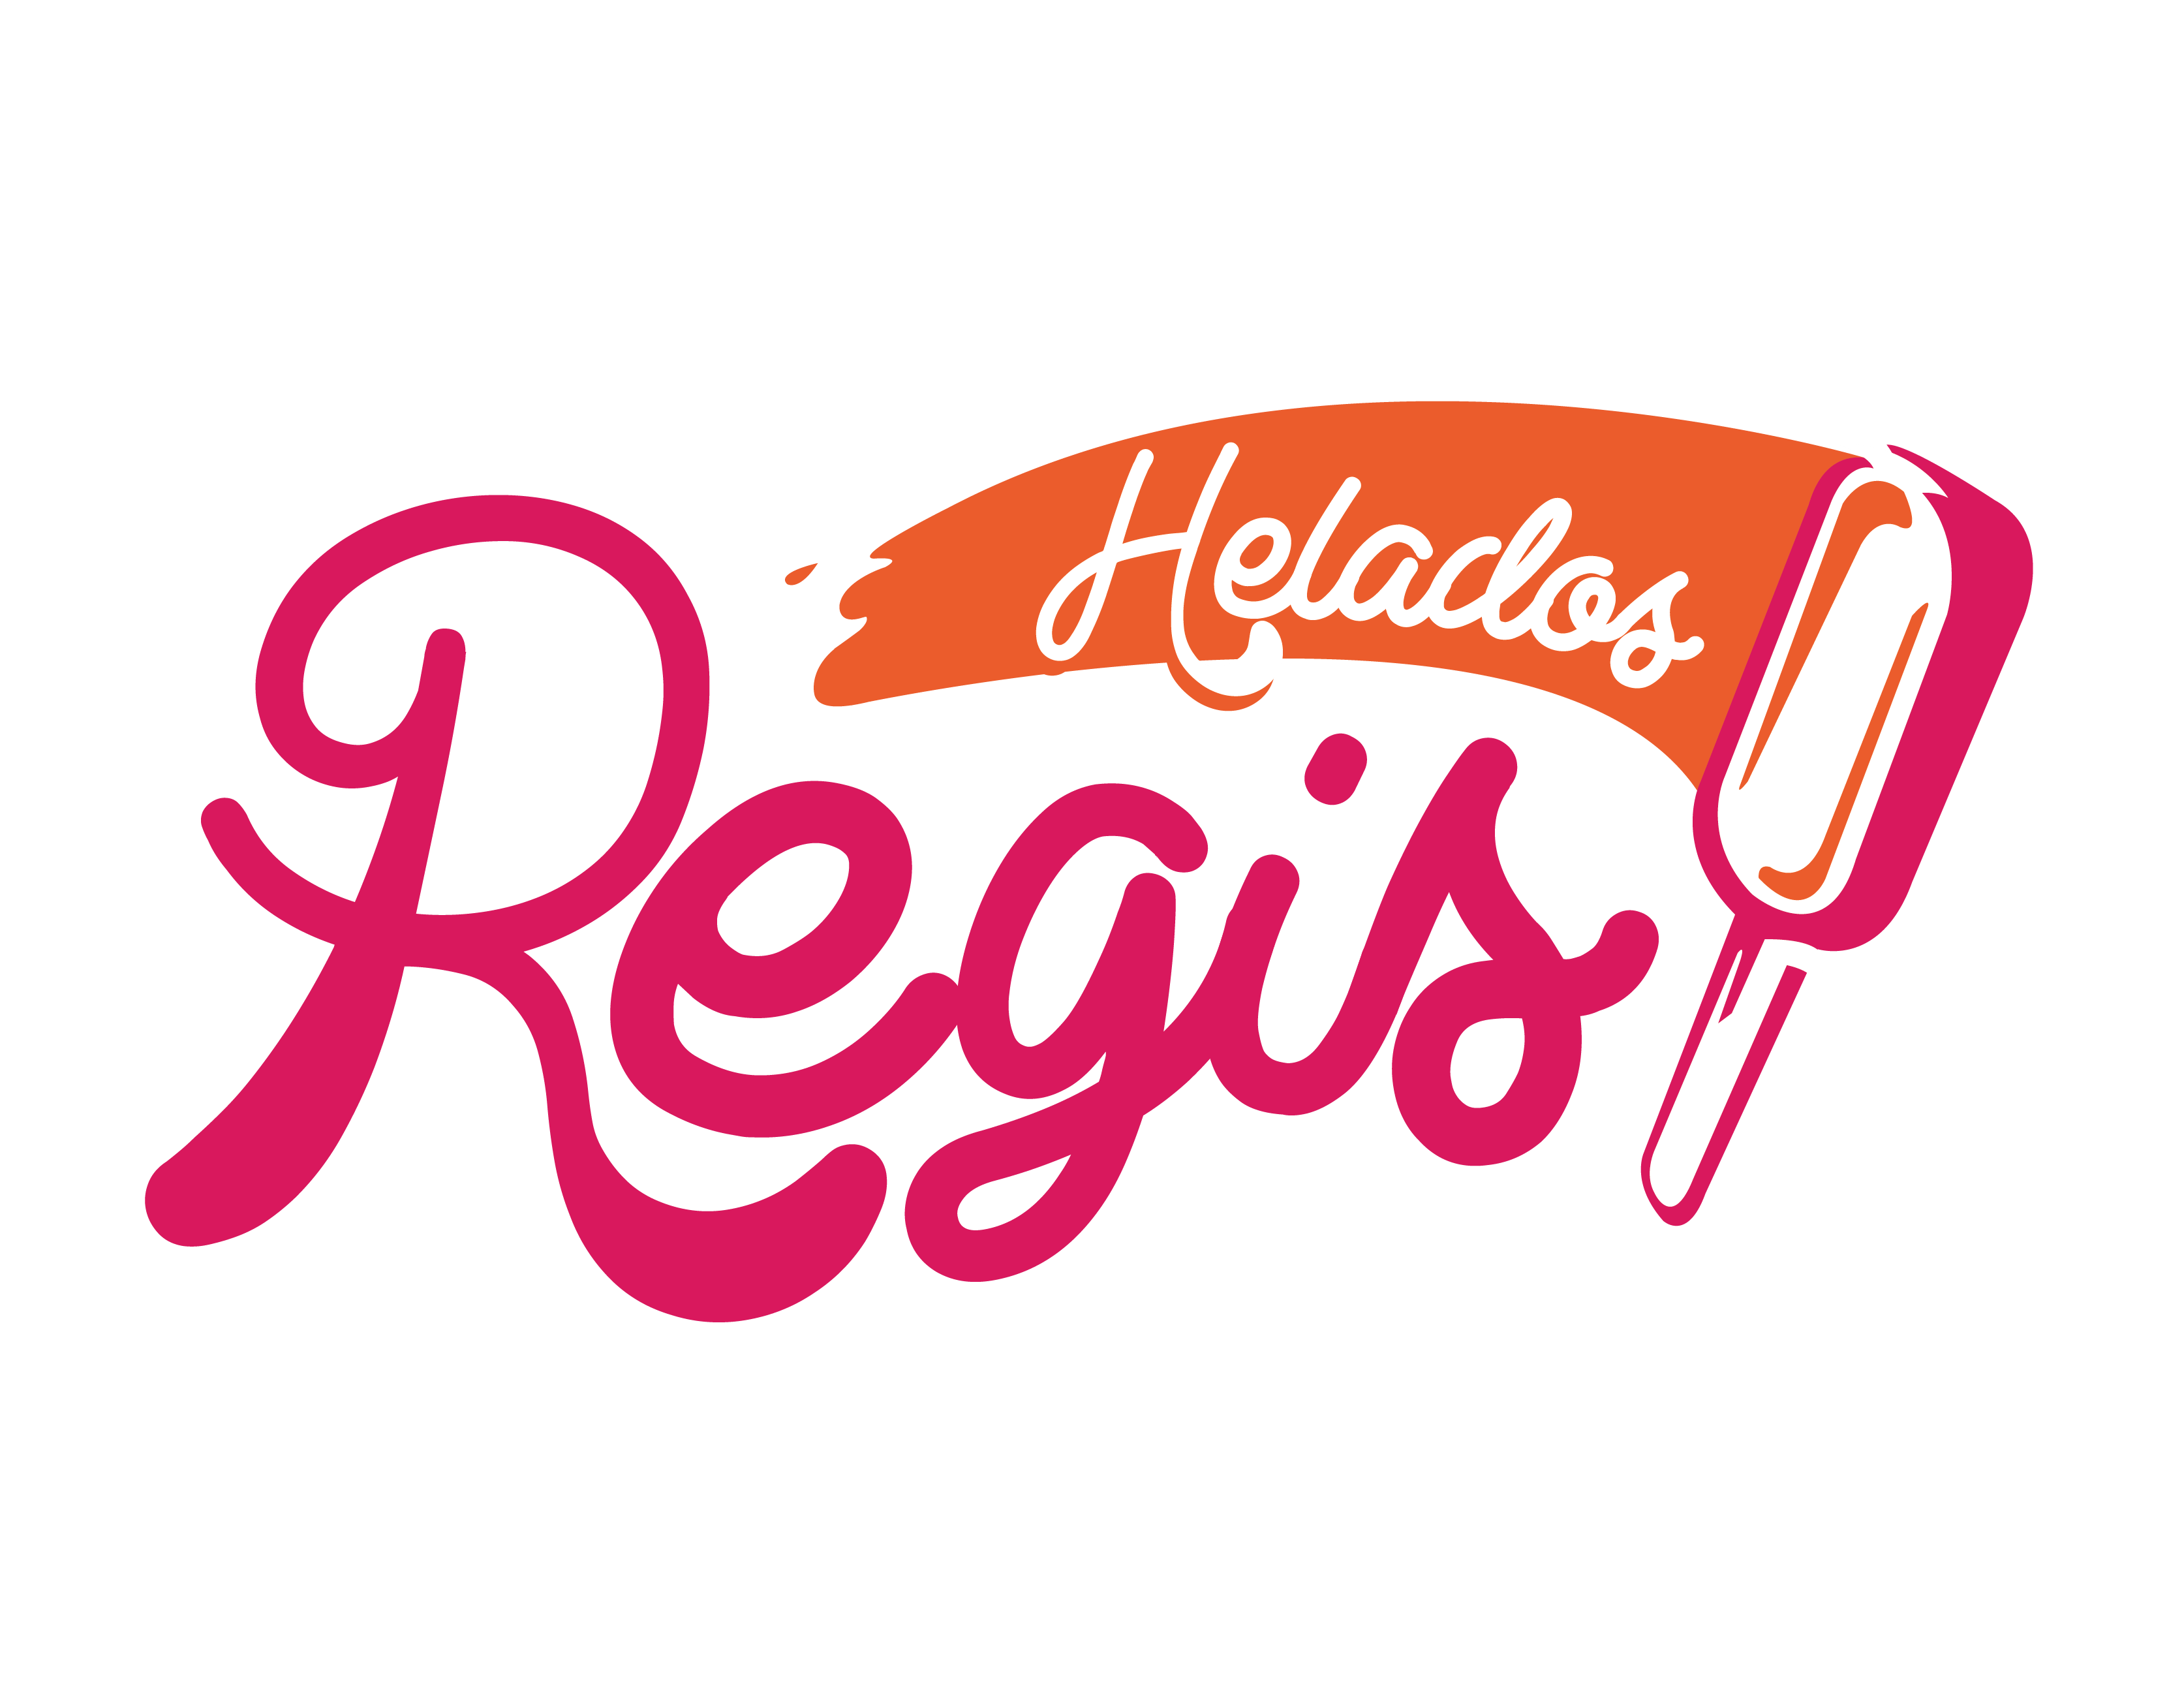 Helados Regis